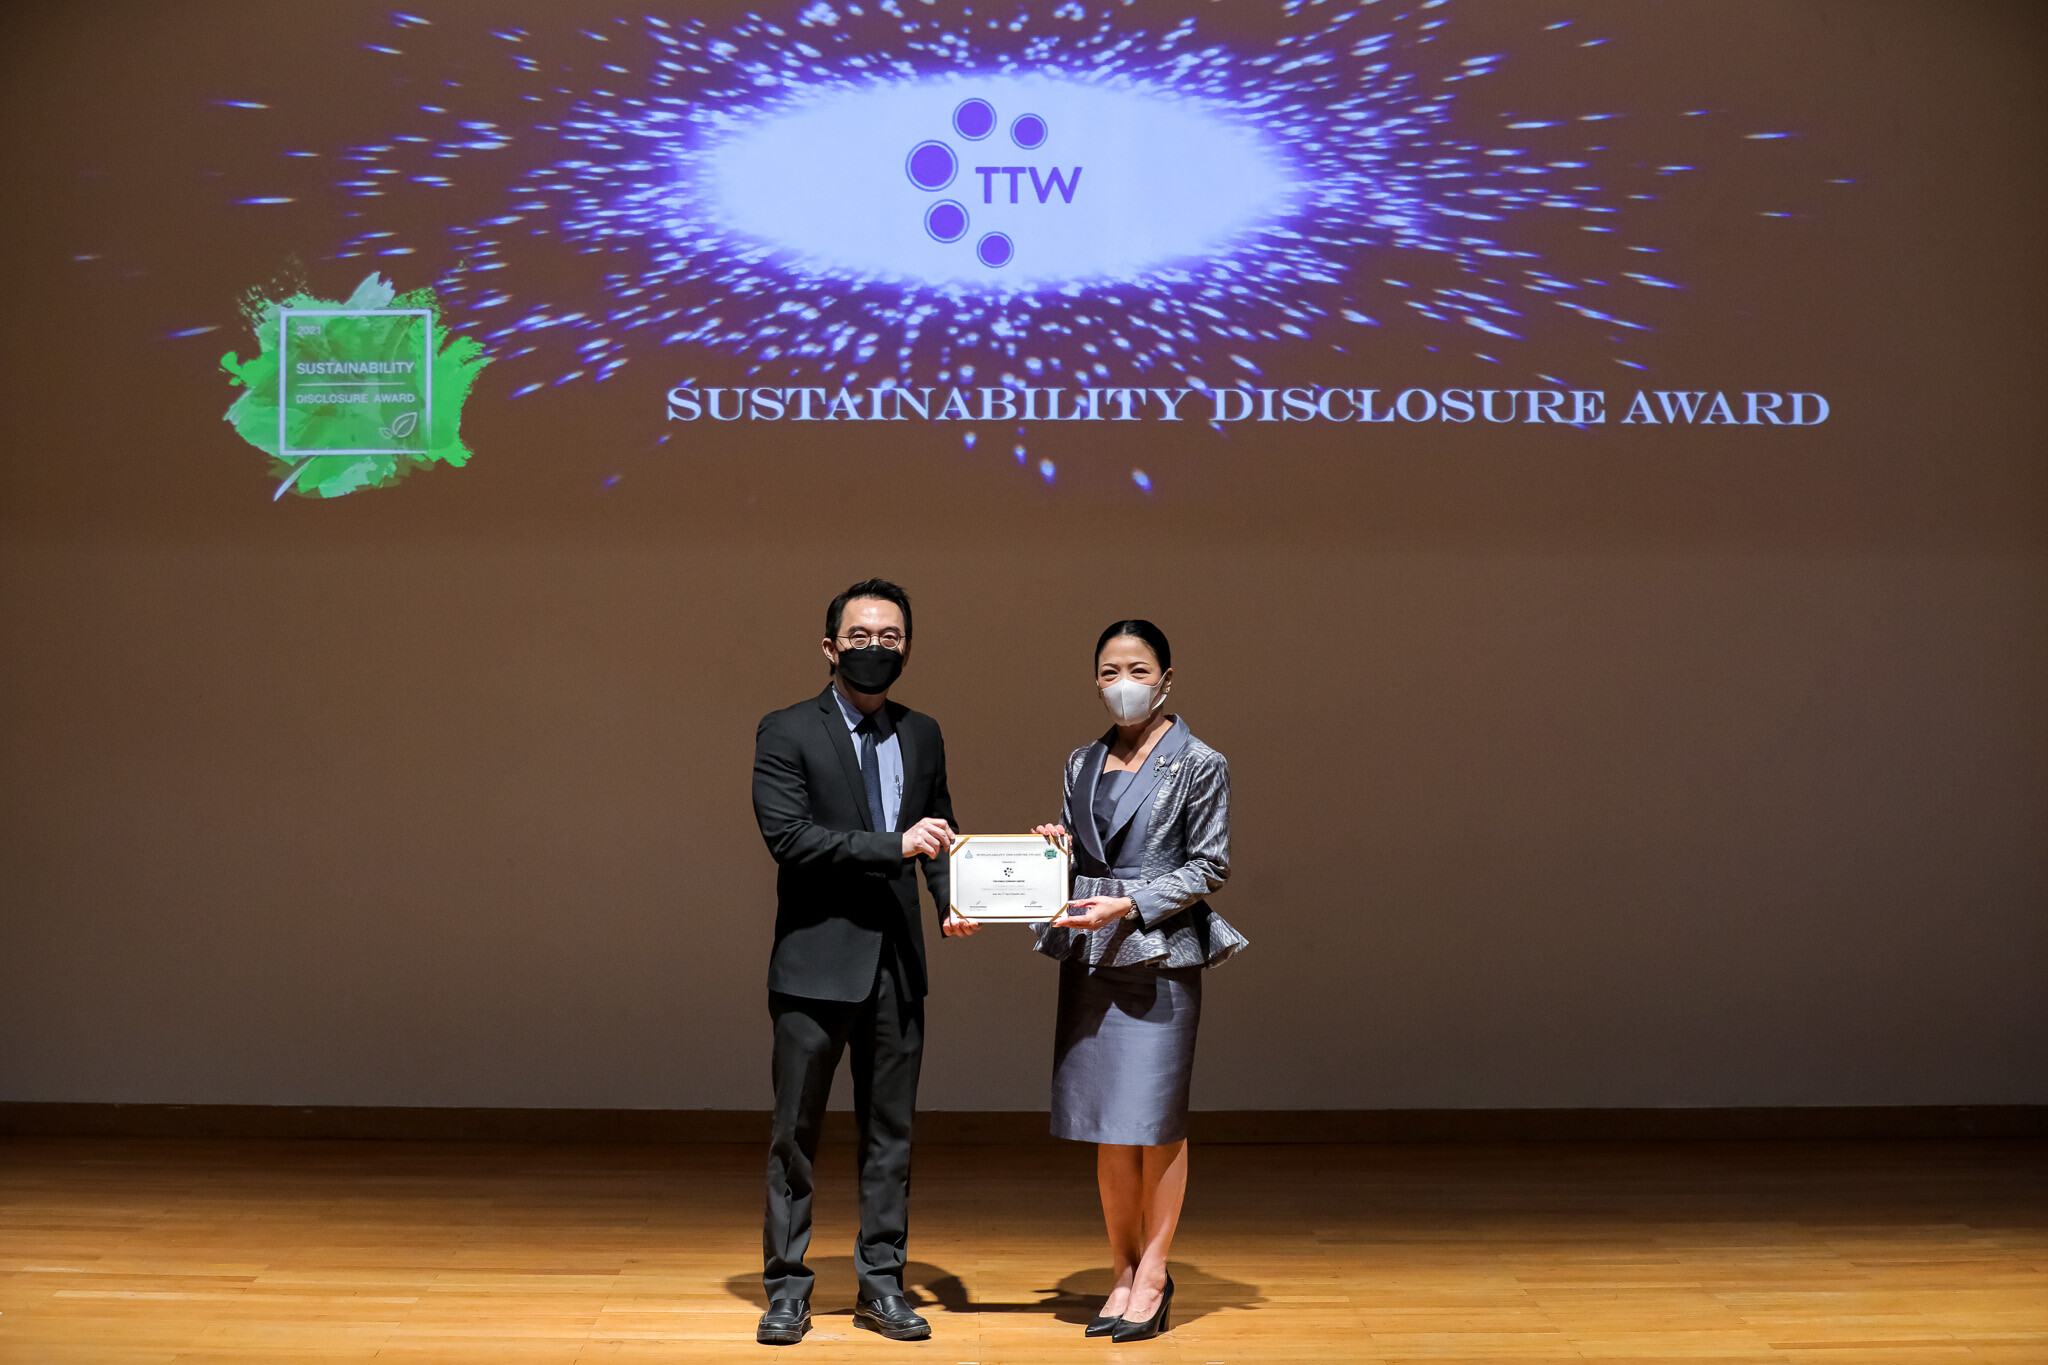 TTW รับรางวัลเกียรติคุณ Sustainability Disclosure Award ประจำปี 2564  จากสถาบันไทยพัฒน์ ต่อเนื่องเป็นปีที่ 3